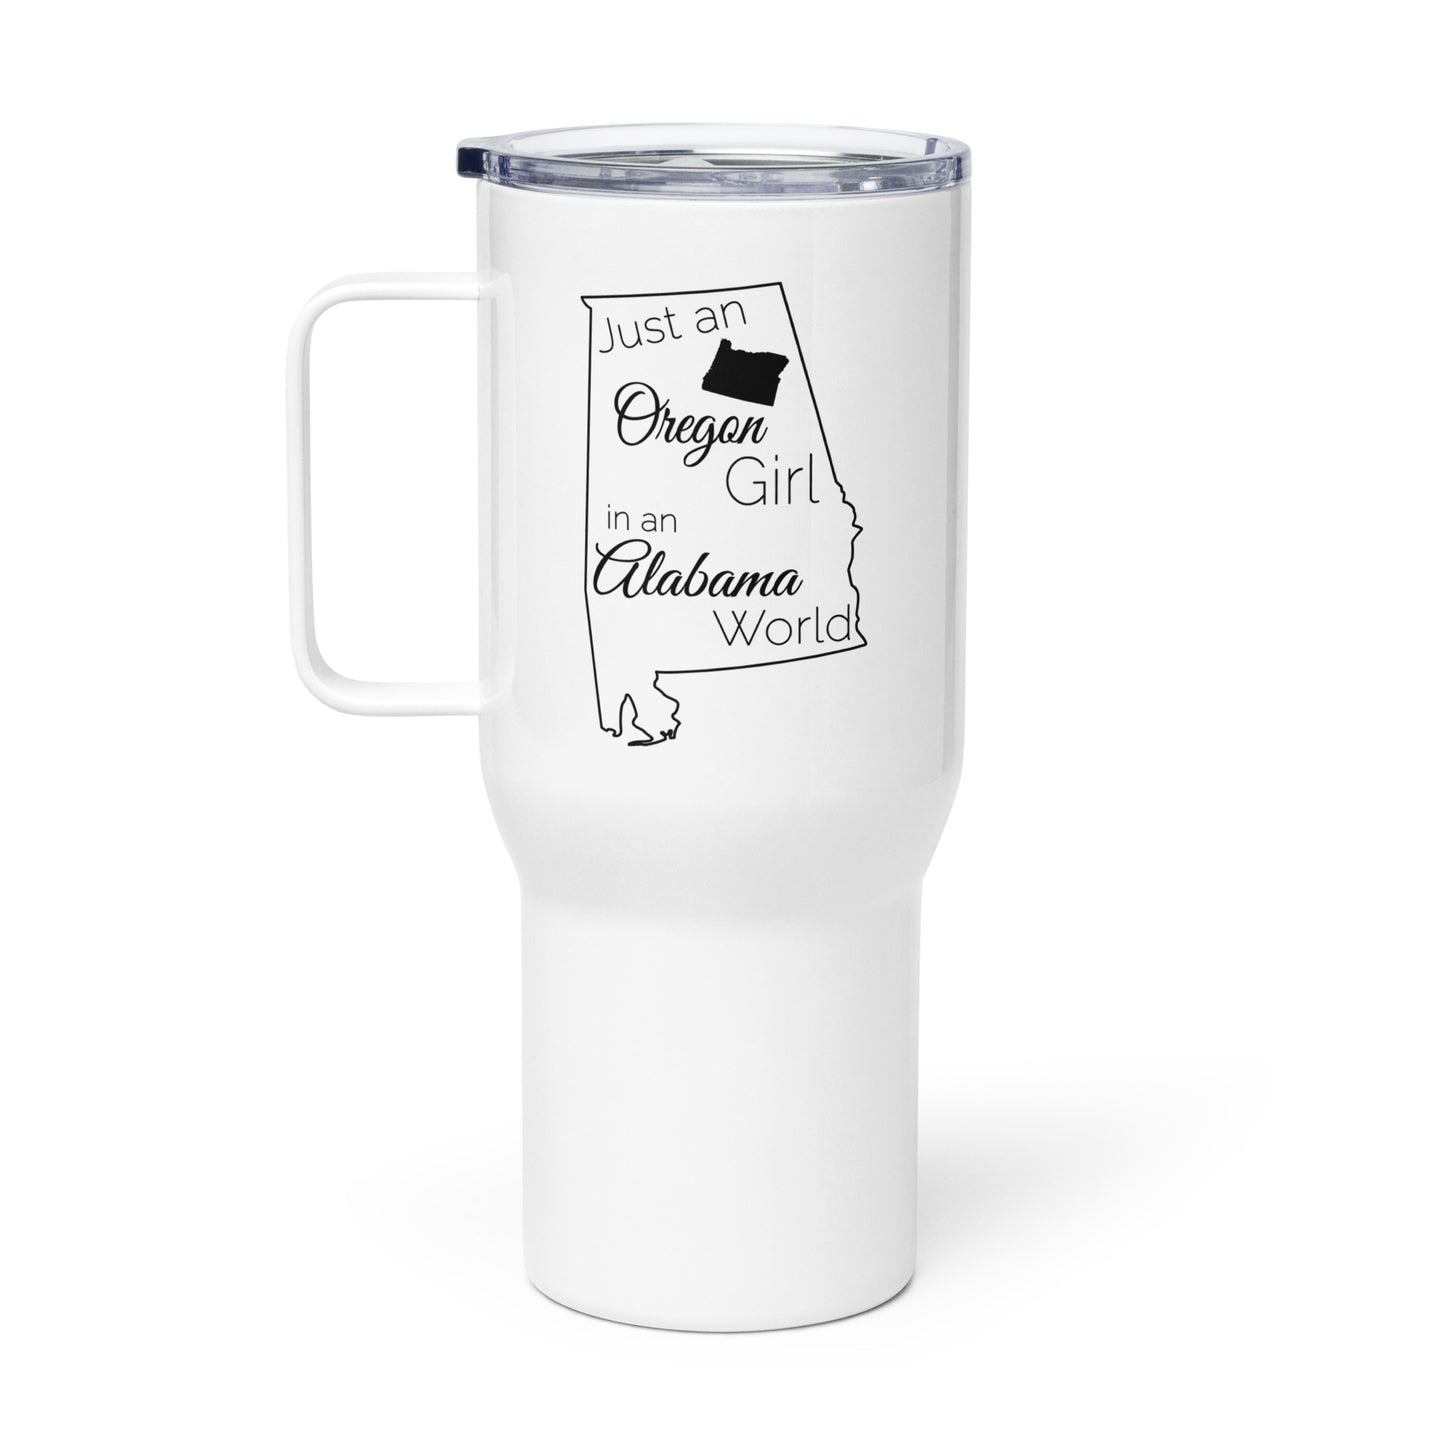 Just an Oregon Girl in an Alabama World Travel mug with a handle